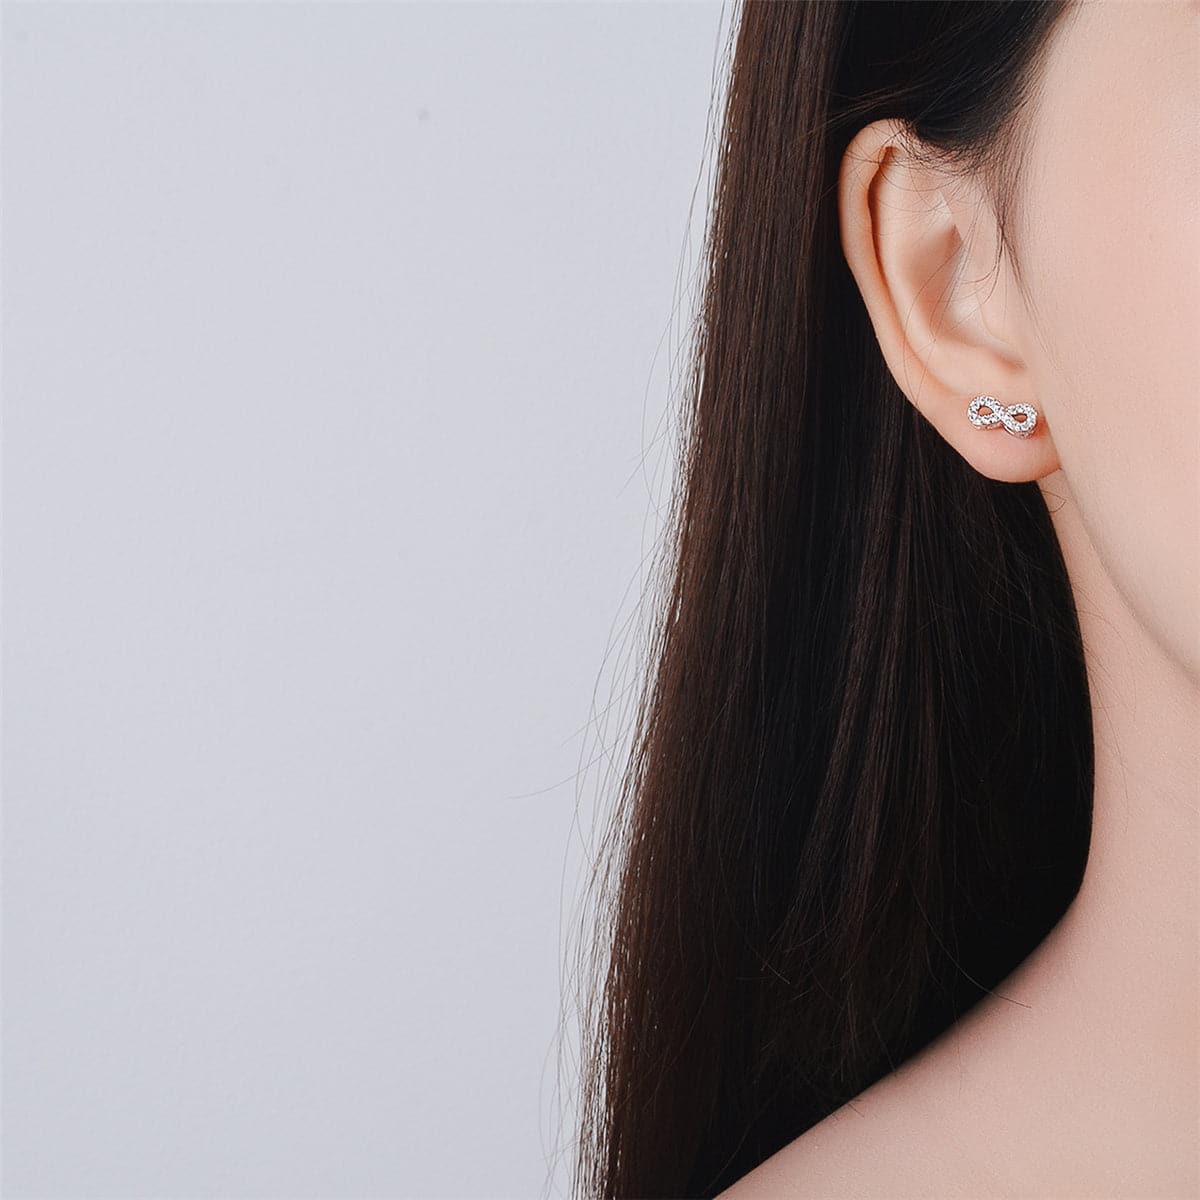 Cubic Zirconia & Silver-Plated Infinity Stud Earrings